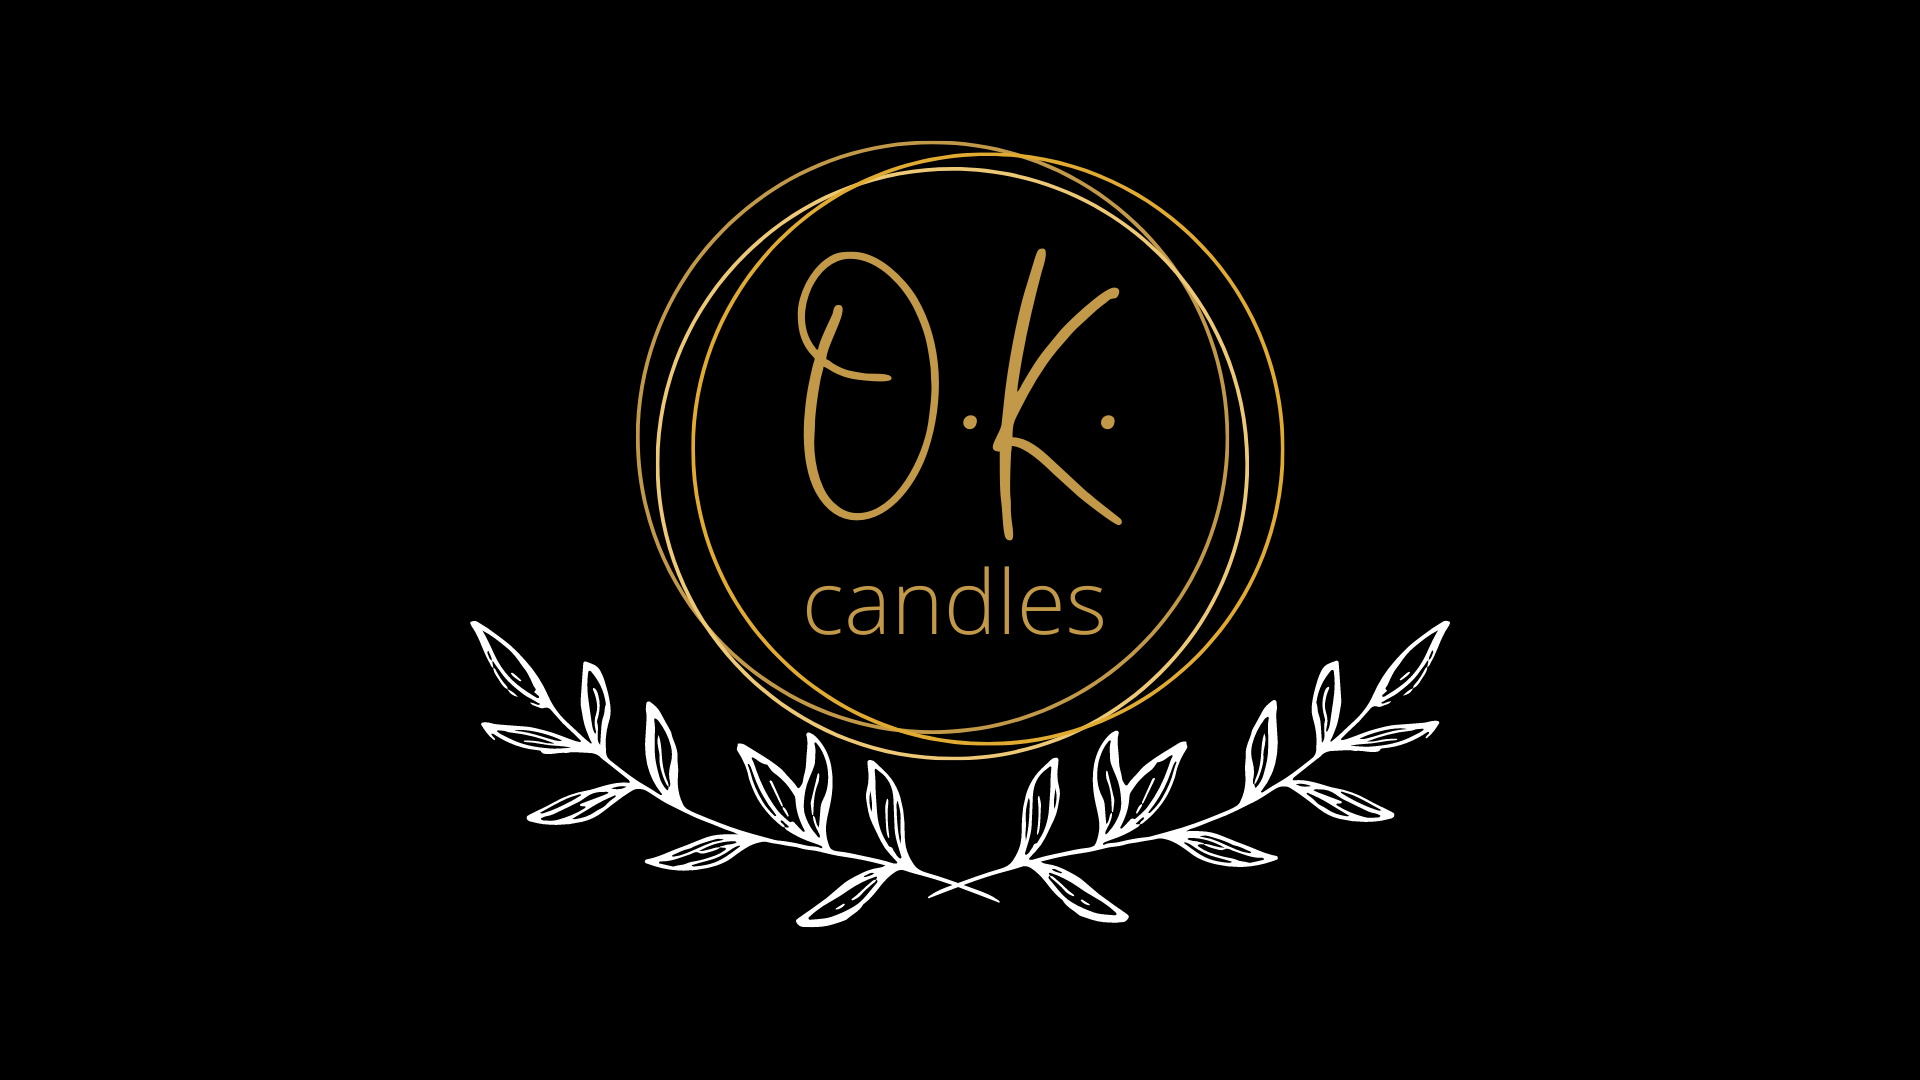 OK Candles